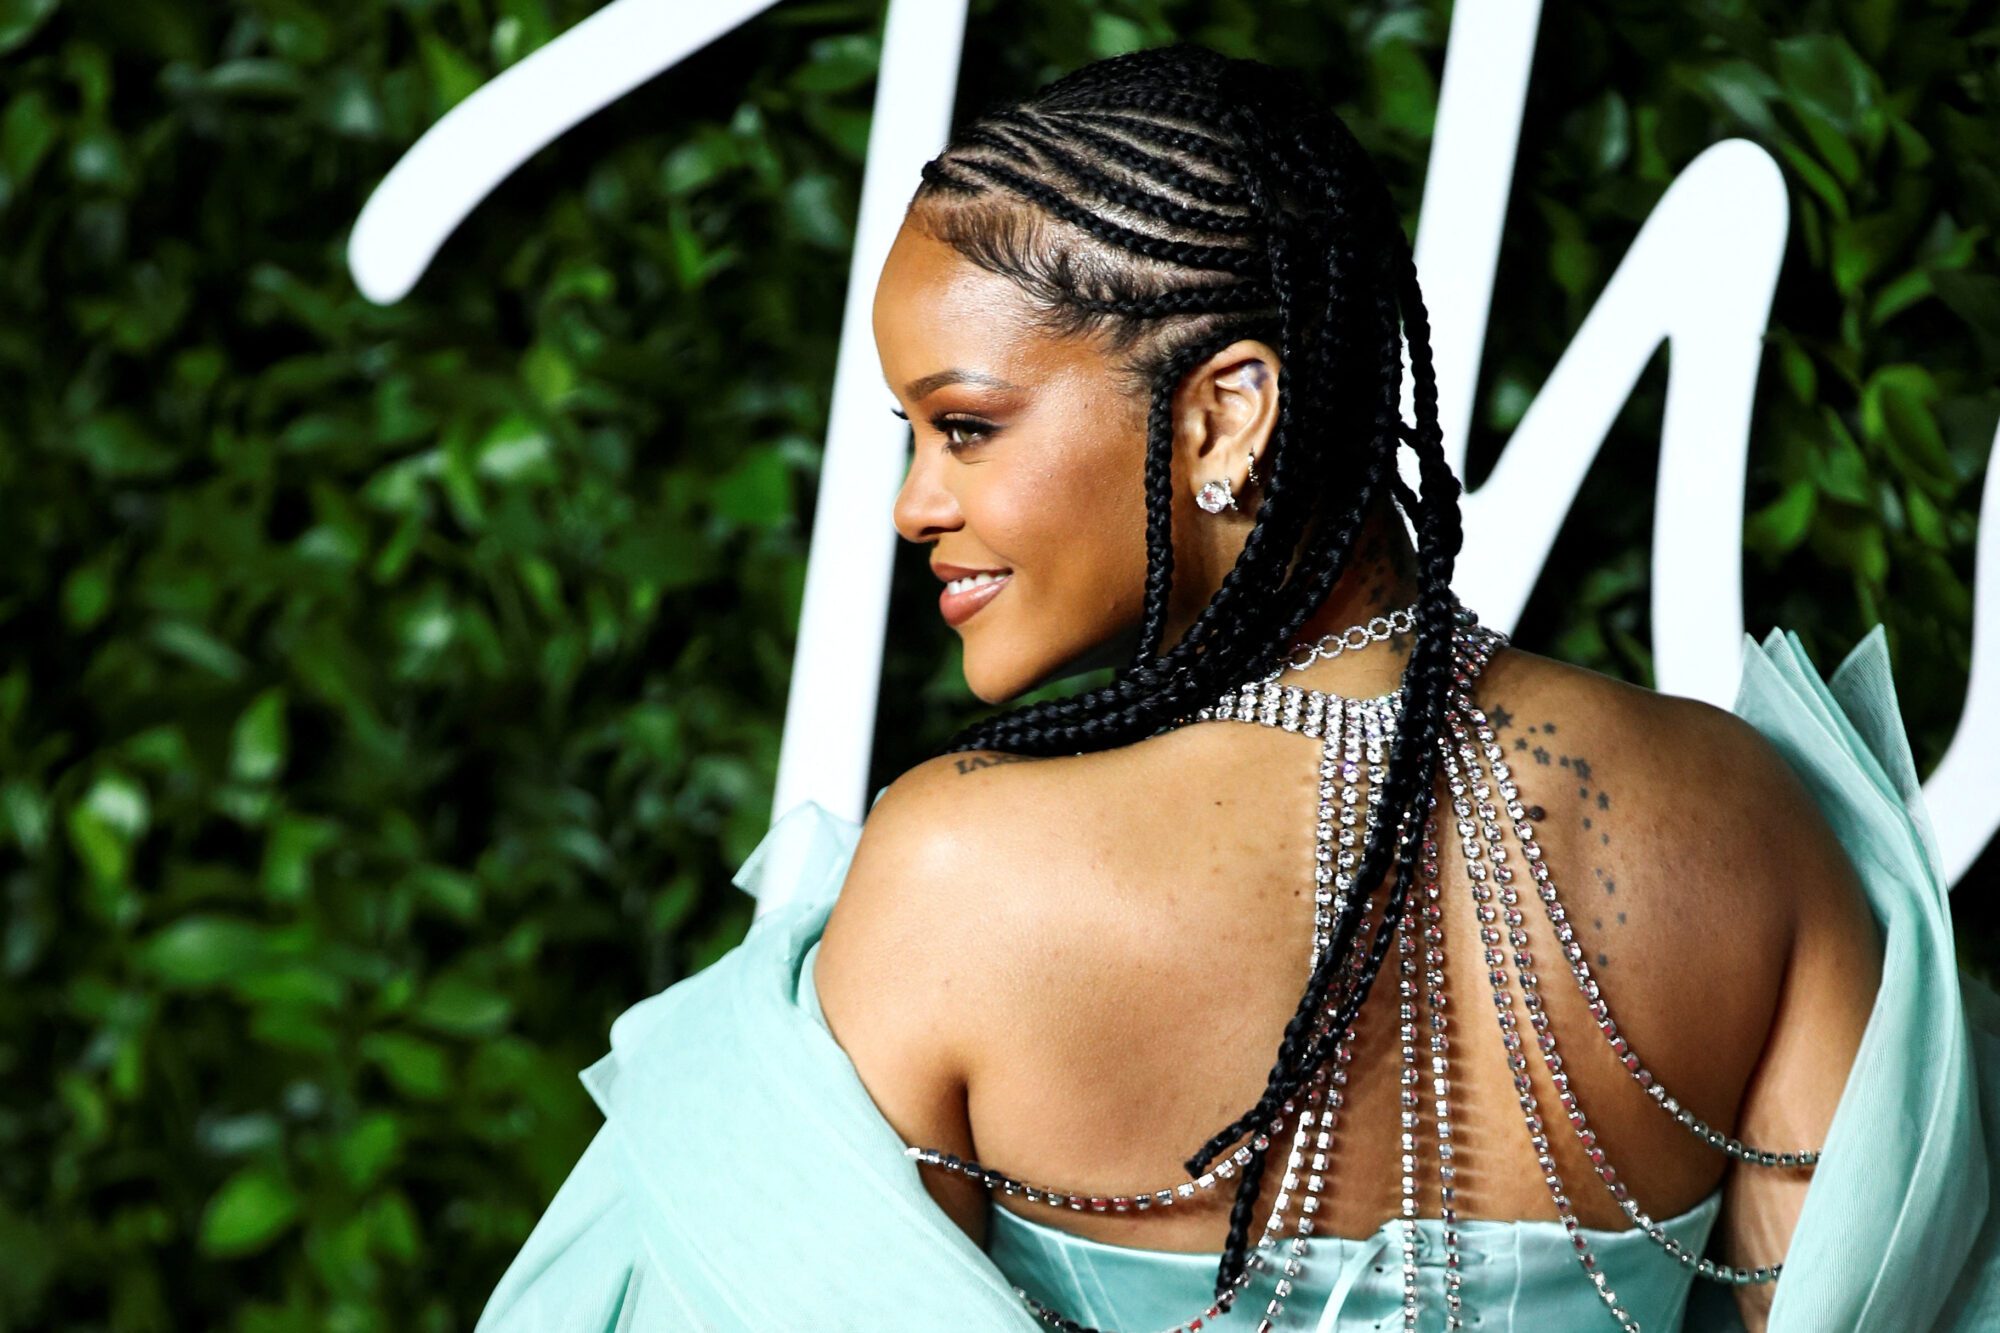 FILE PHOTO: Singer Rihanna arrives at the Fashion Awards 2019 in London, Britain 